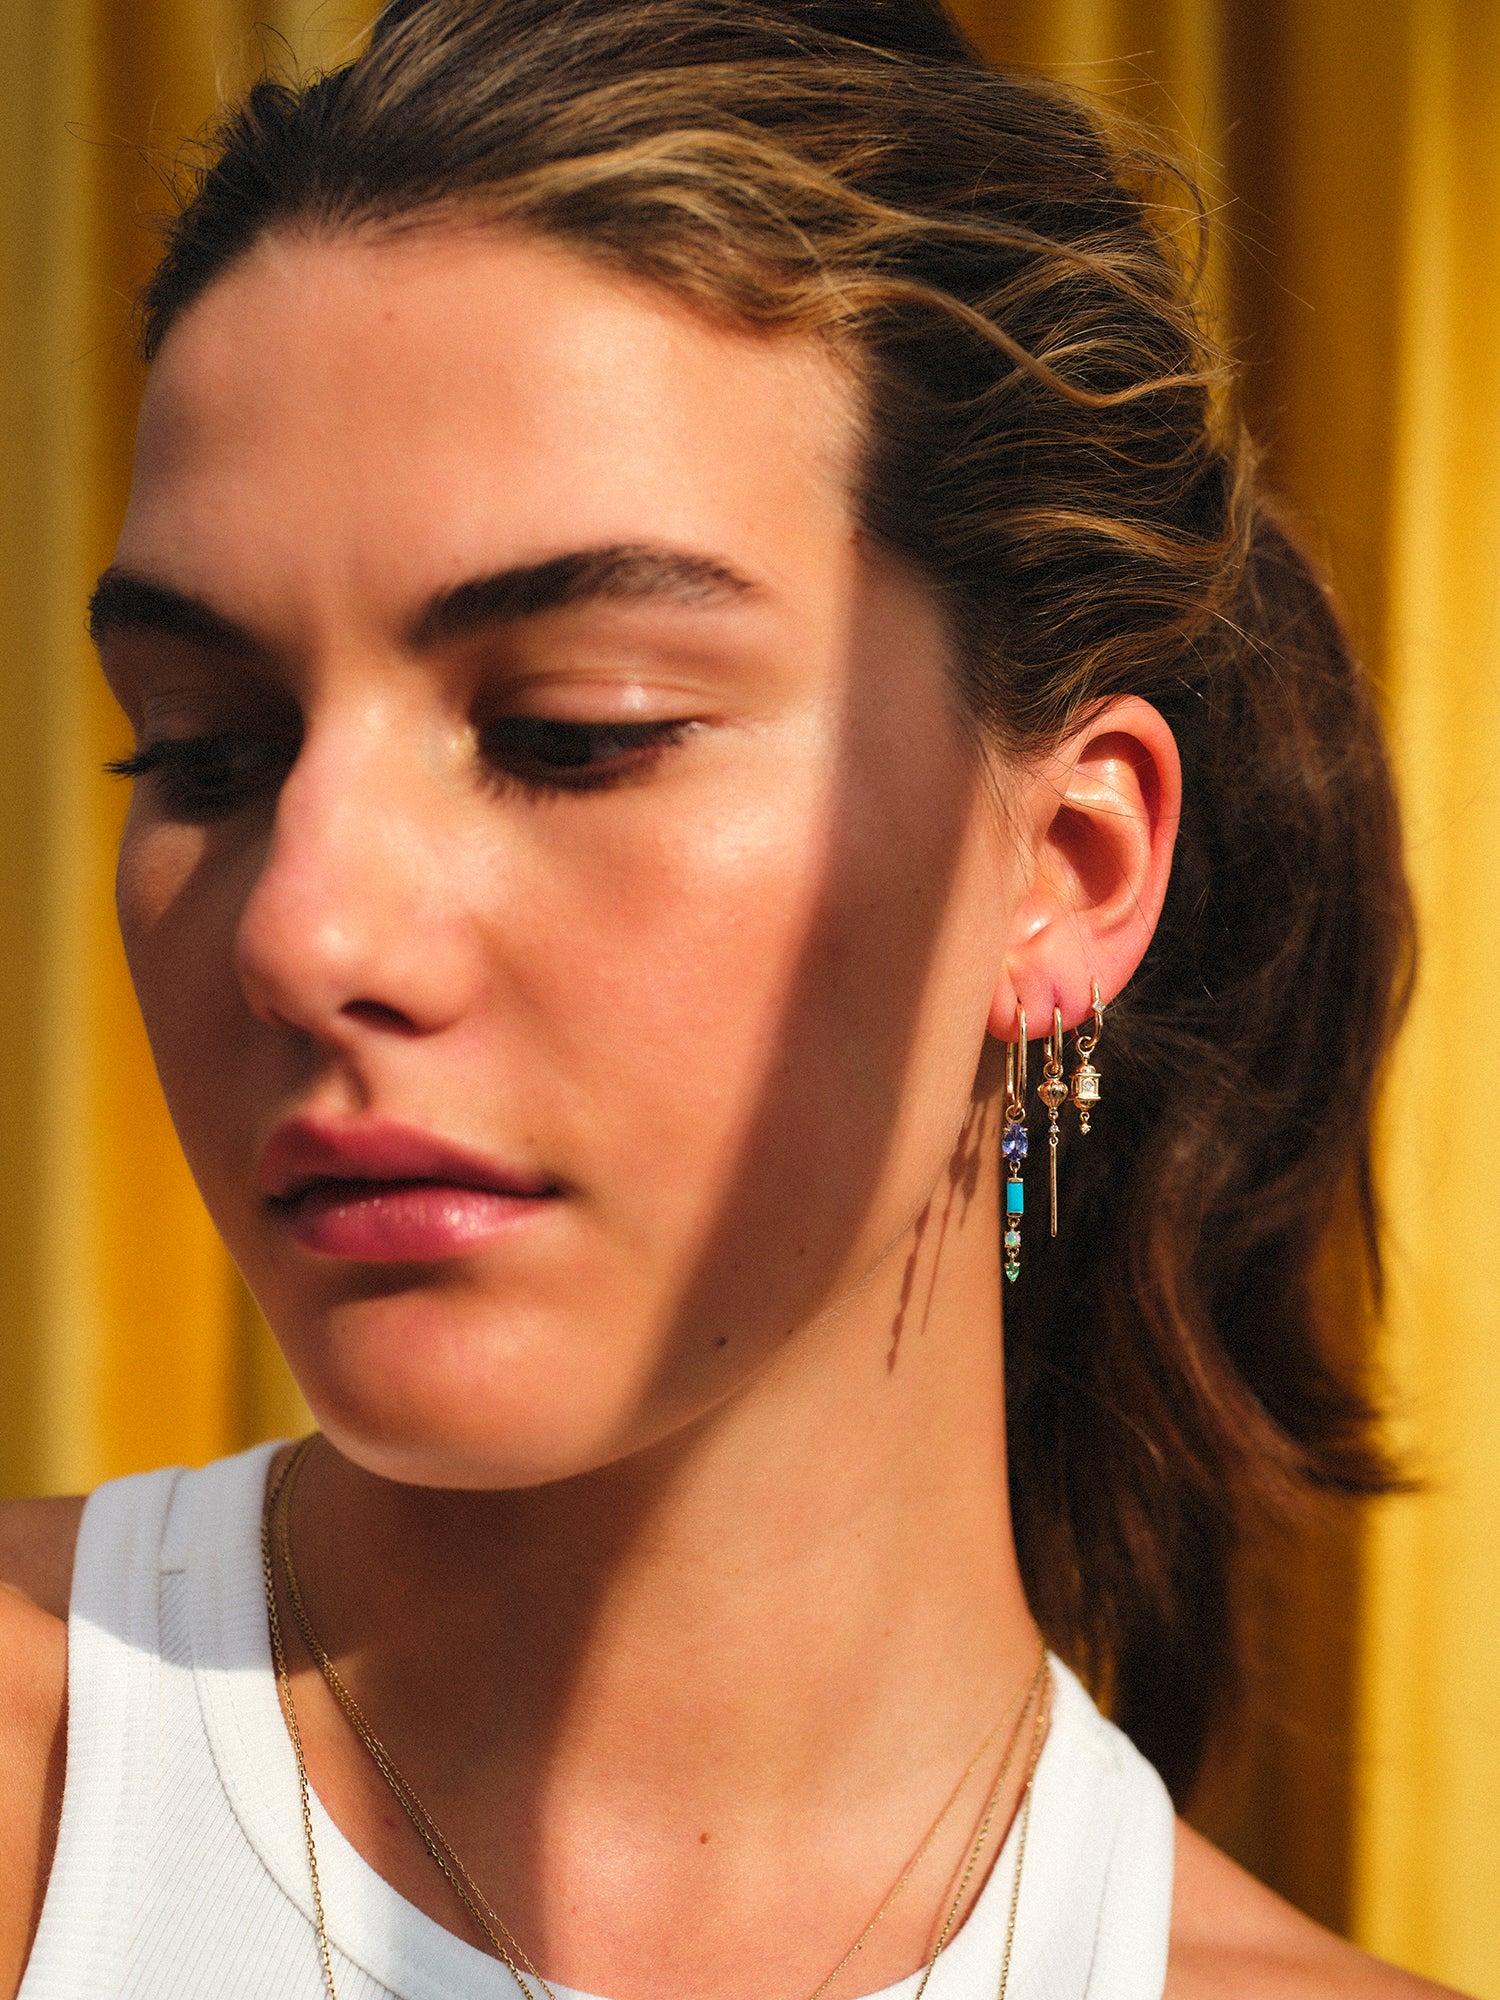 metier model wearing different sized gold earring